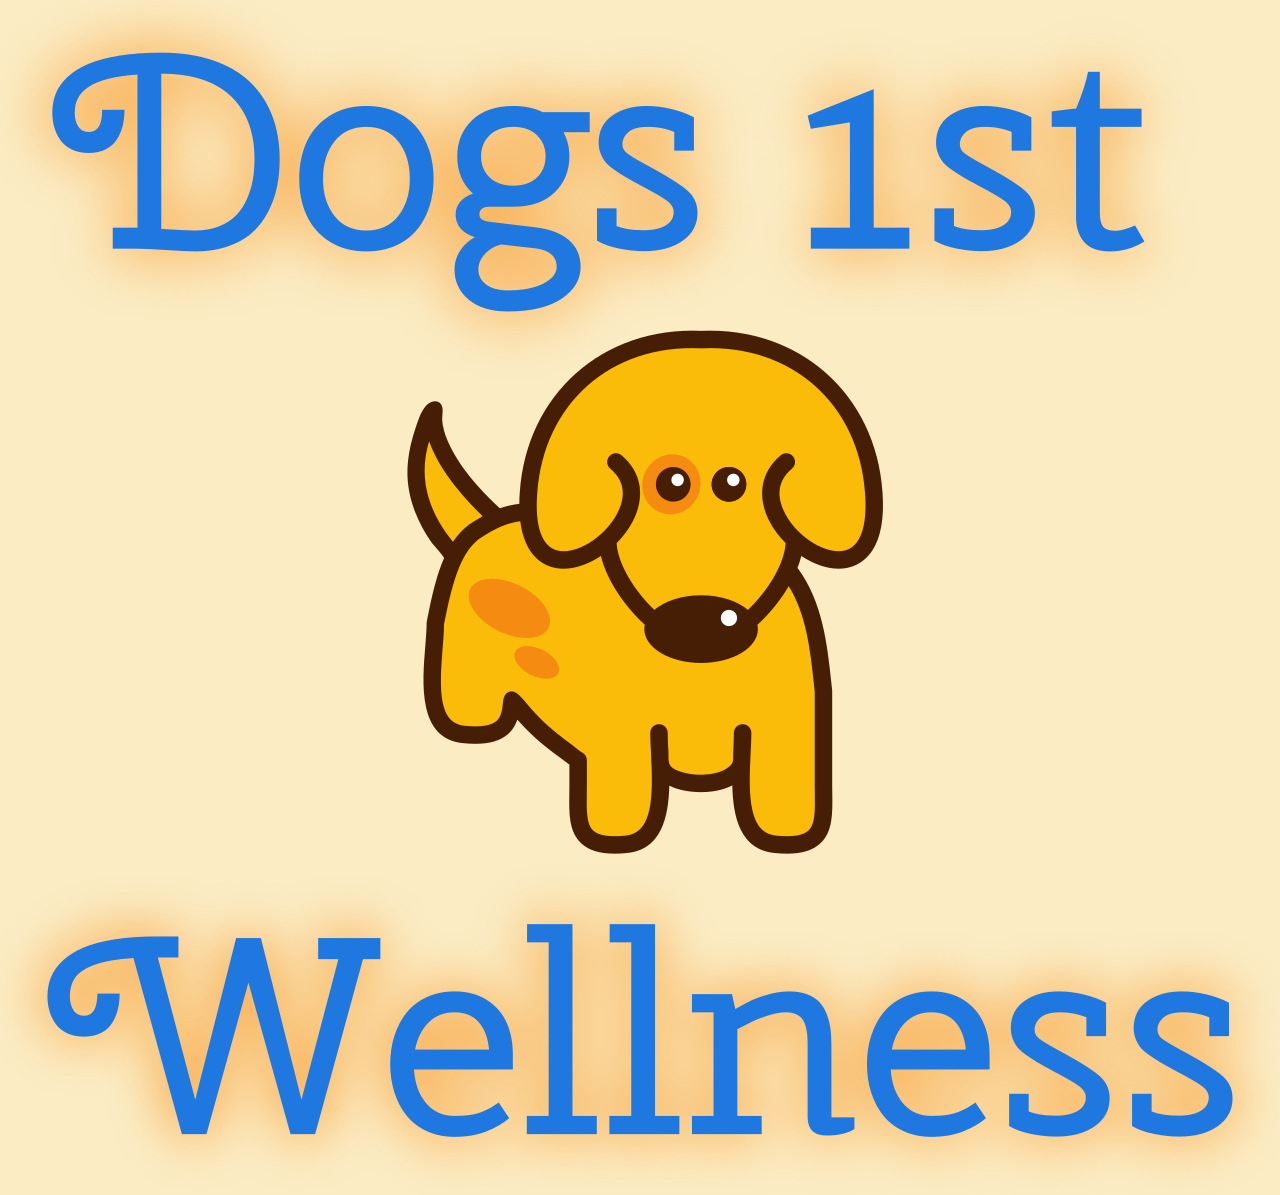 Dogs 1st Wellness's logo